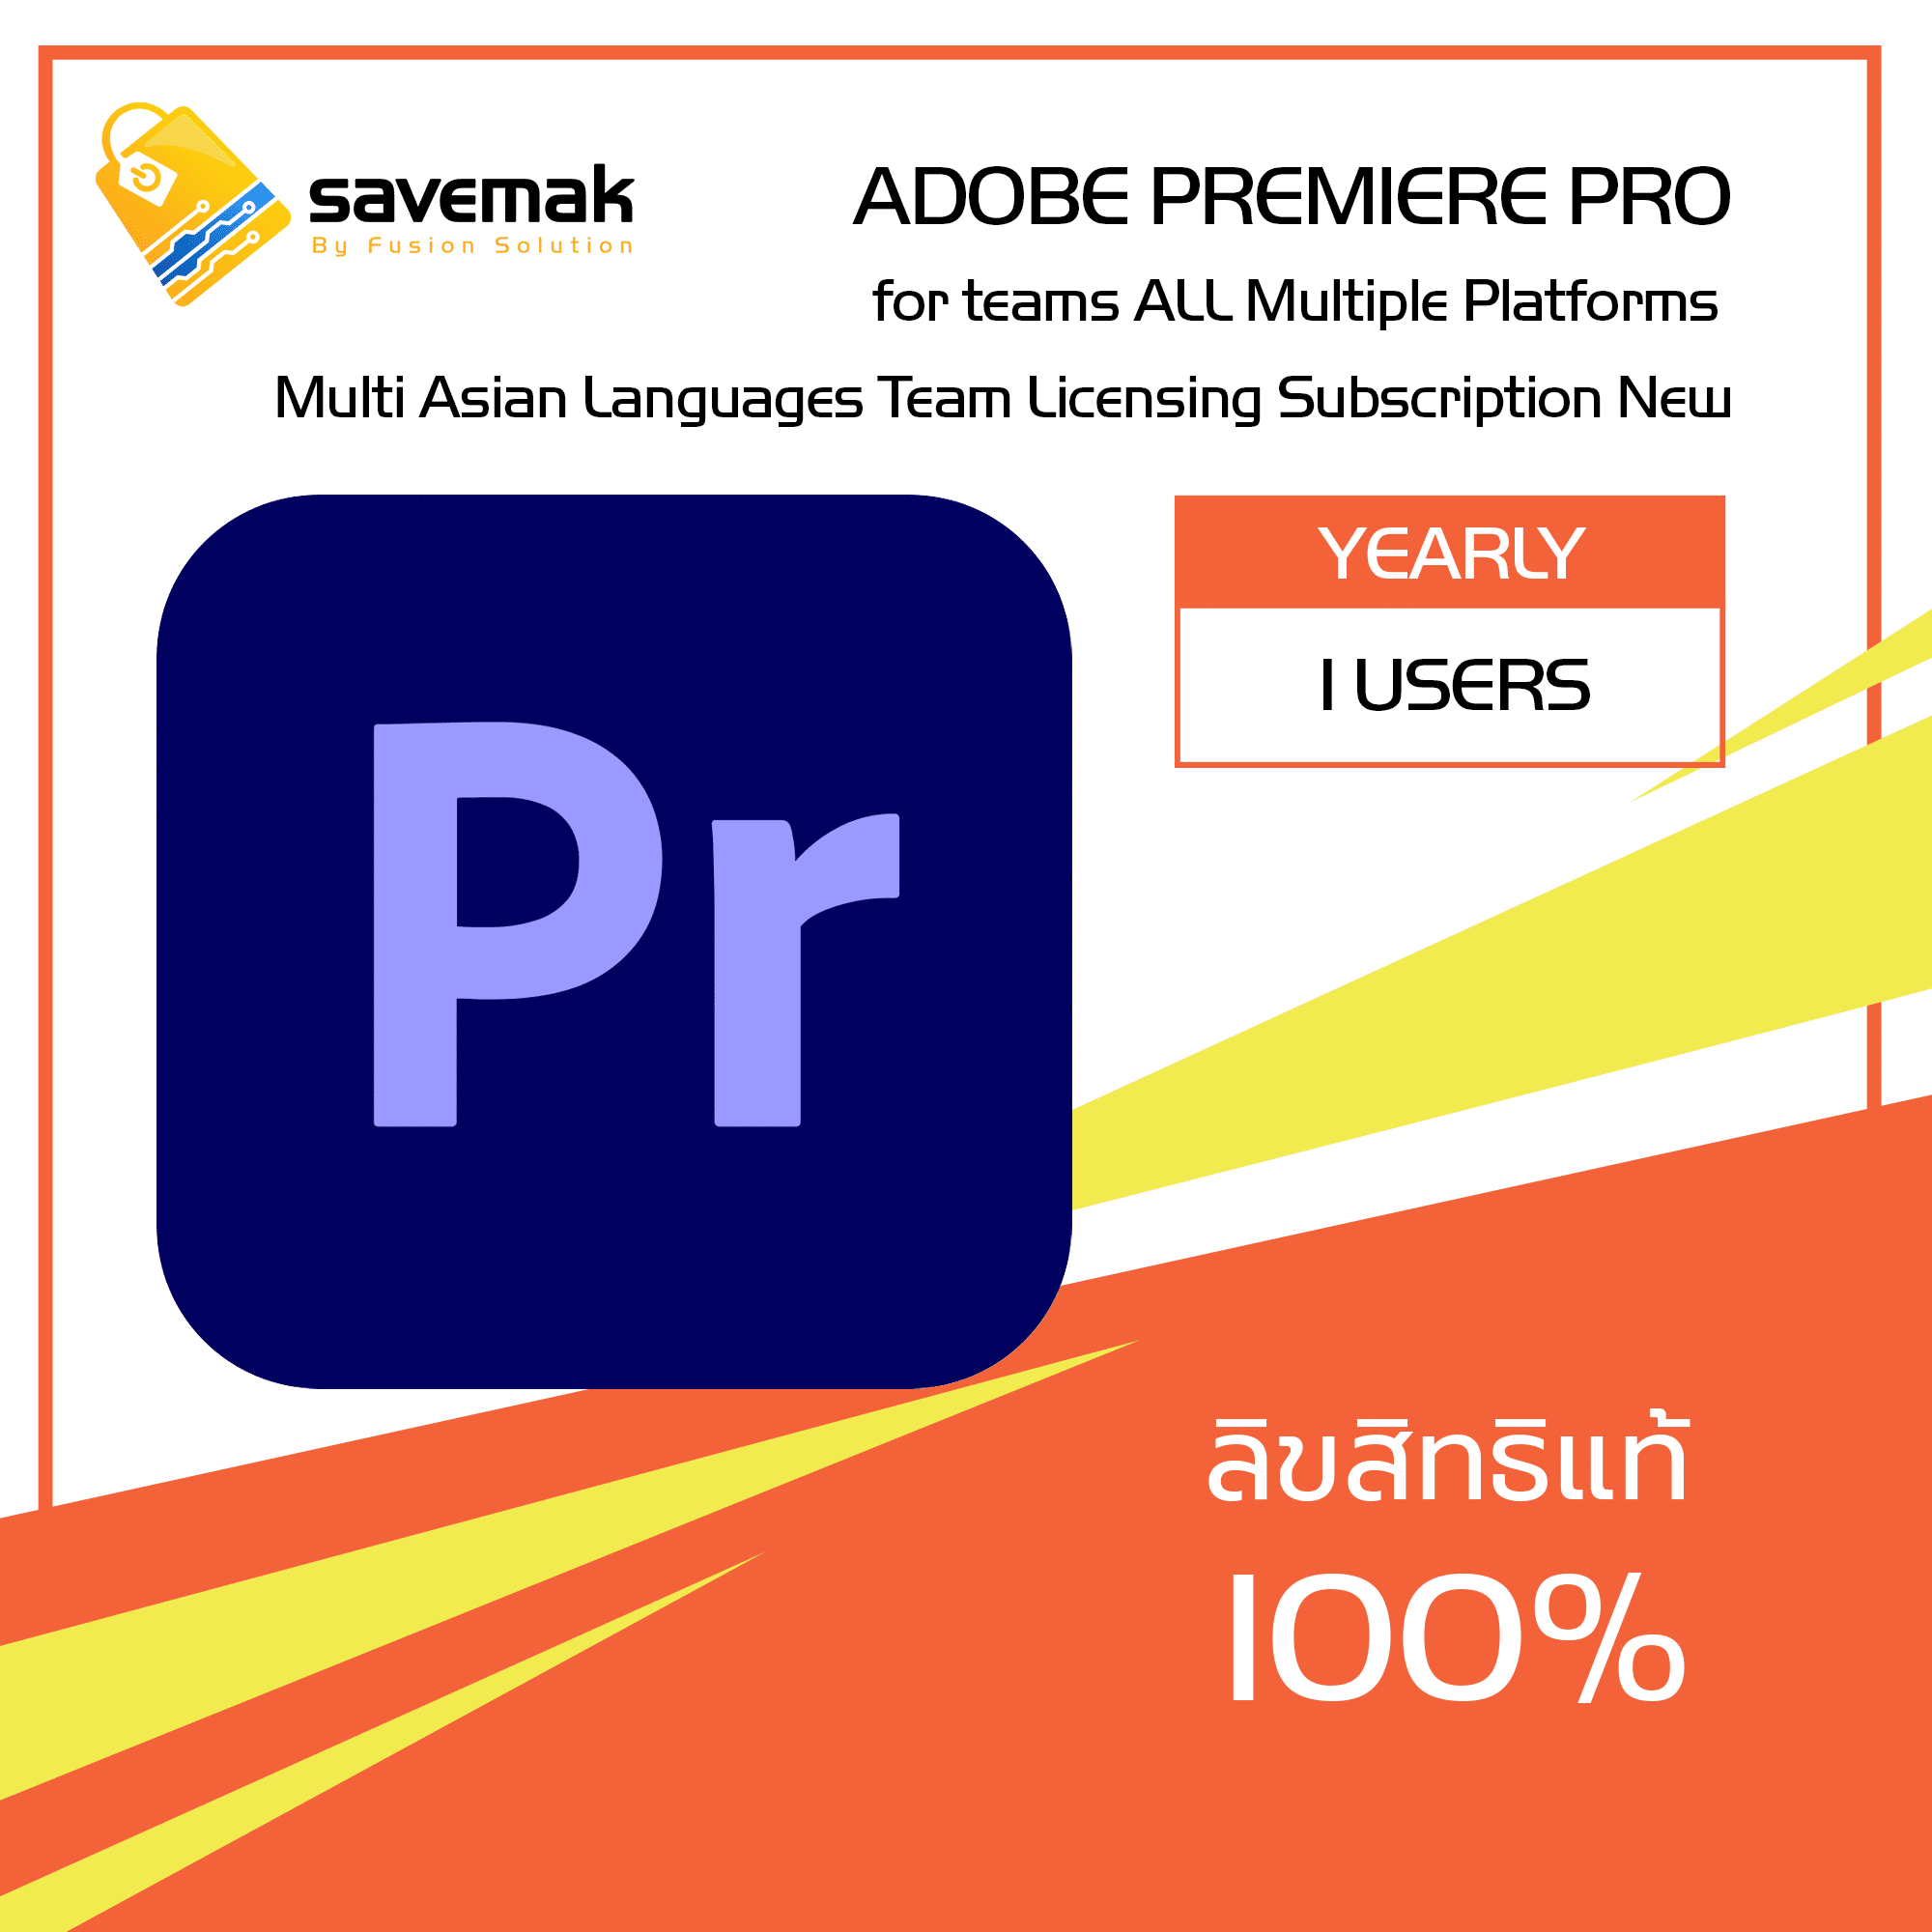 adobe premiere pro 1.5 free download full version